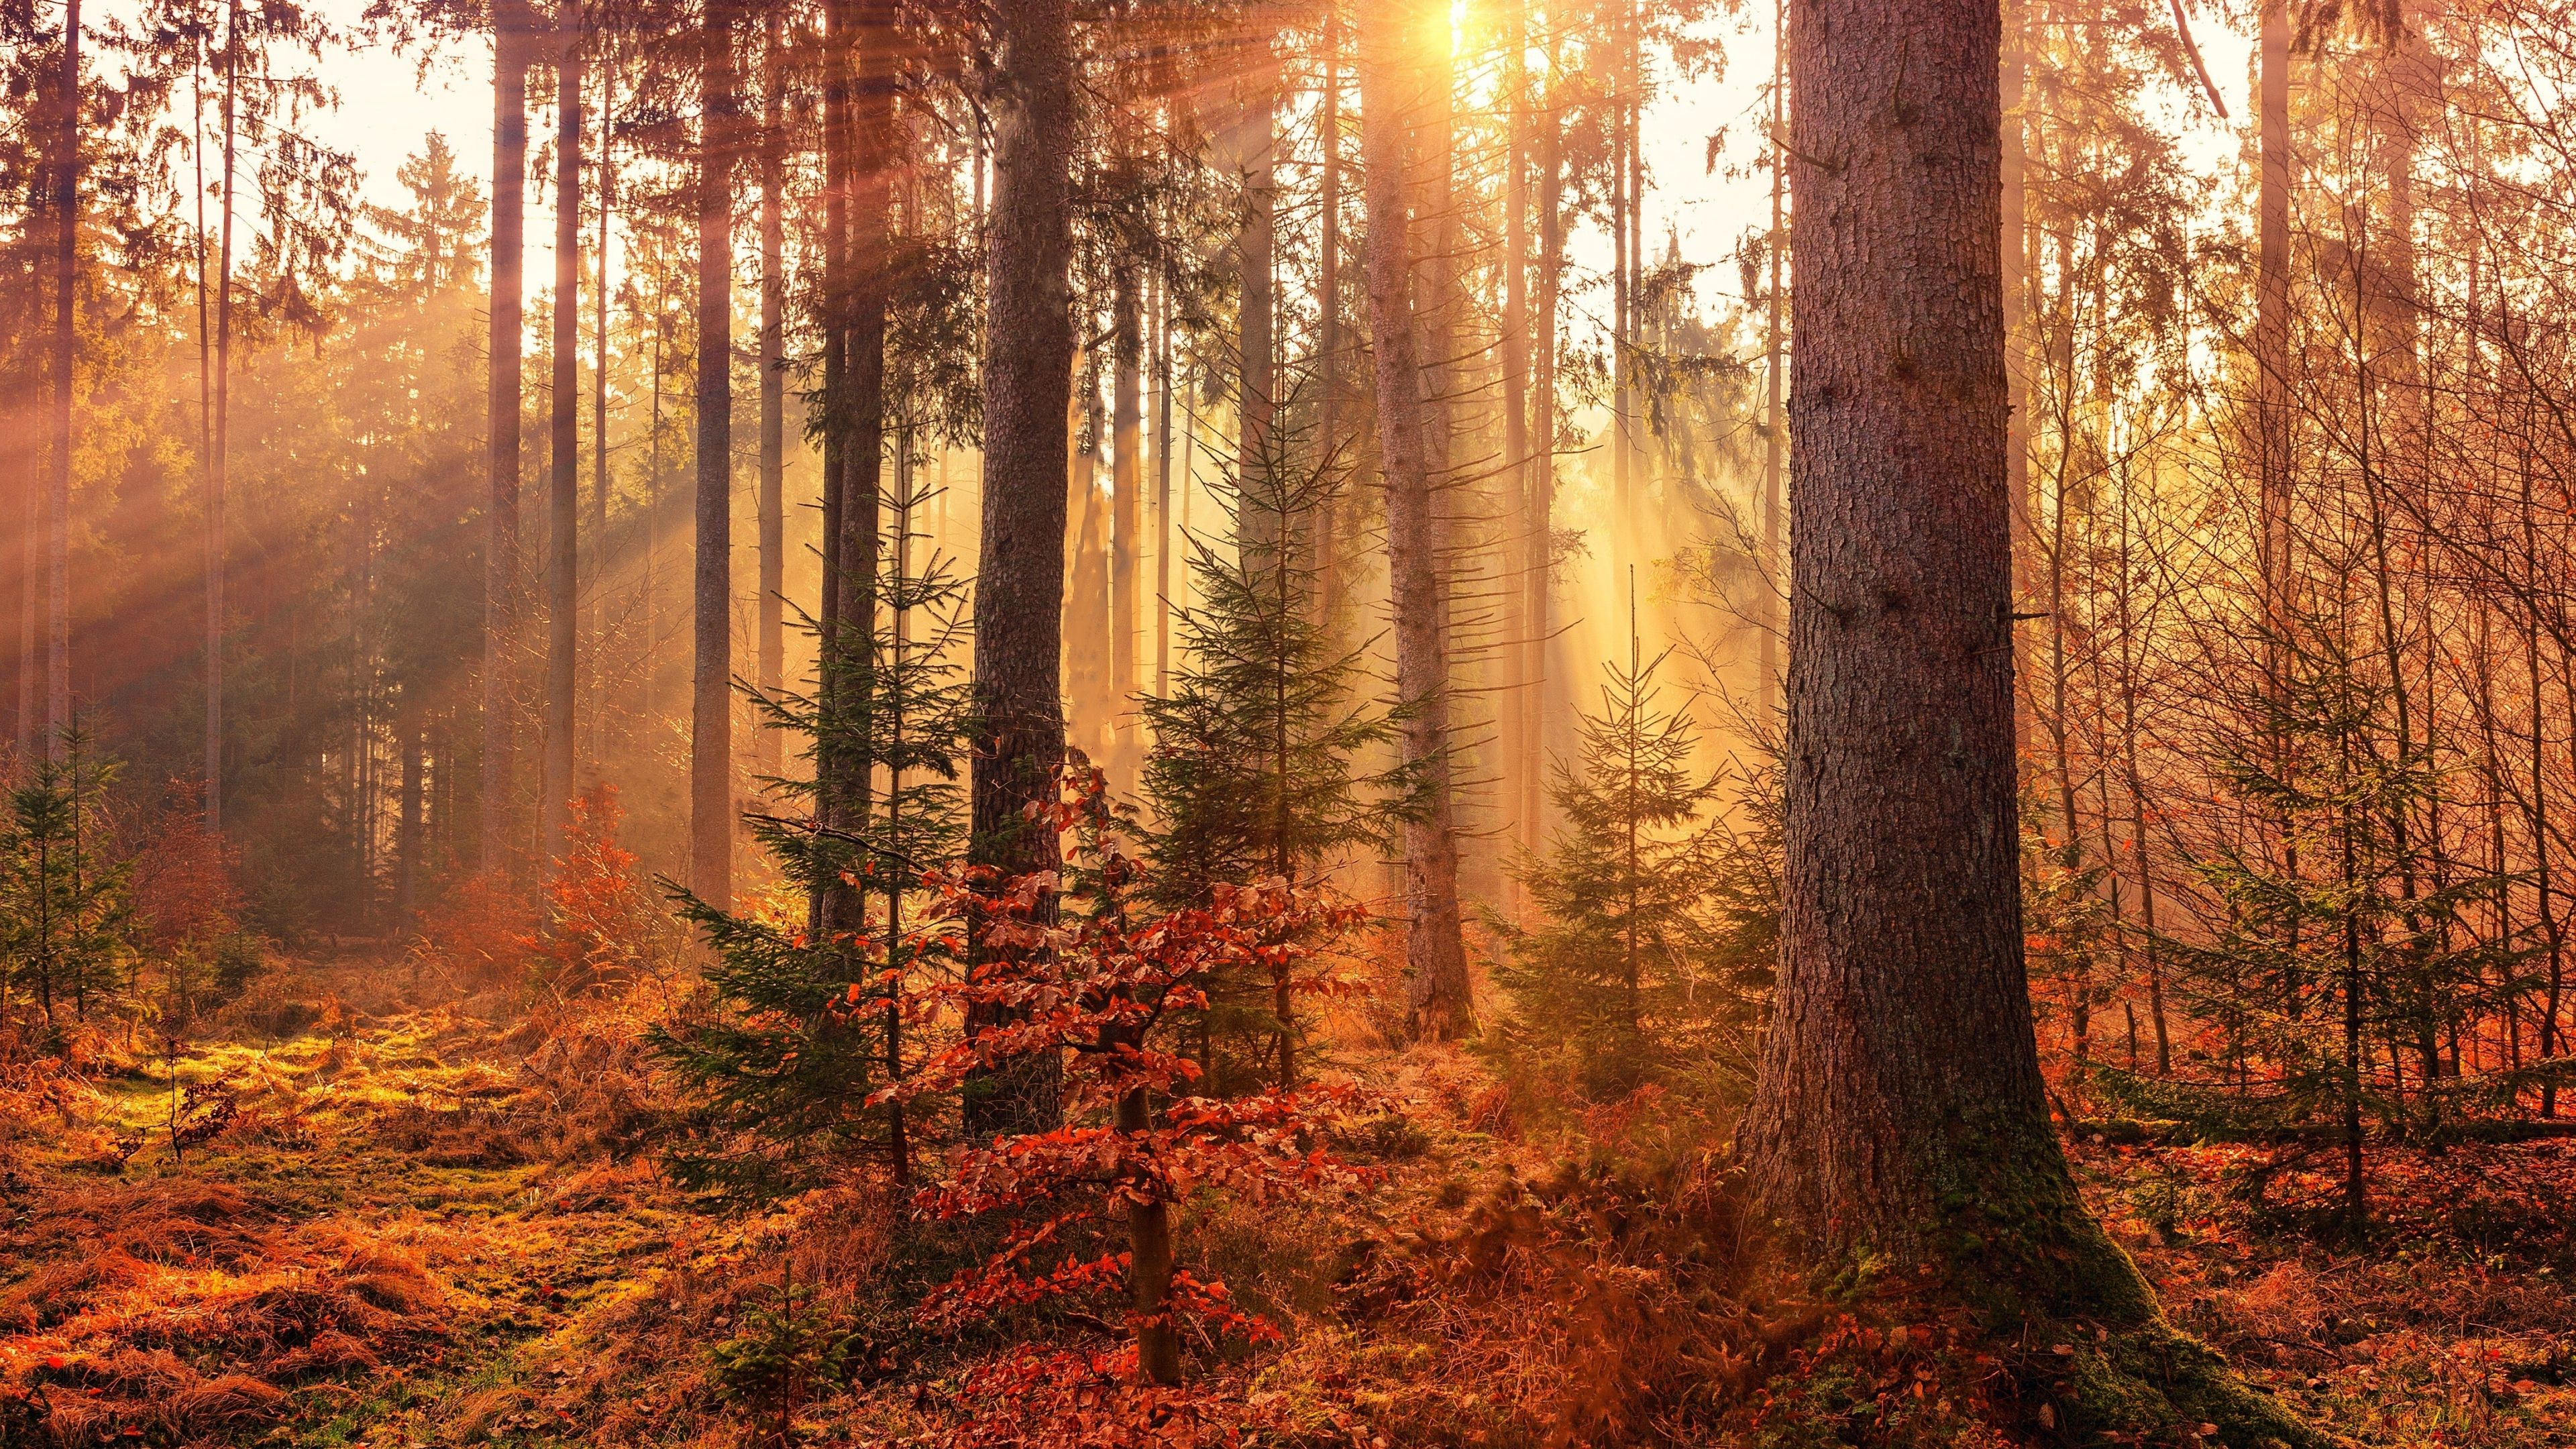 Download 3840x2160 wallpaper sunbeams, autumn, tree, forest, 4k, uhd 16: widescreen, 3840x2160 HD image, background, 5491